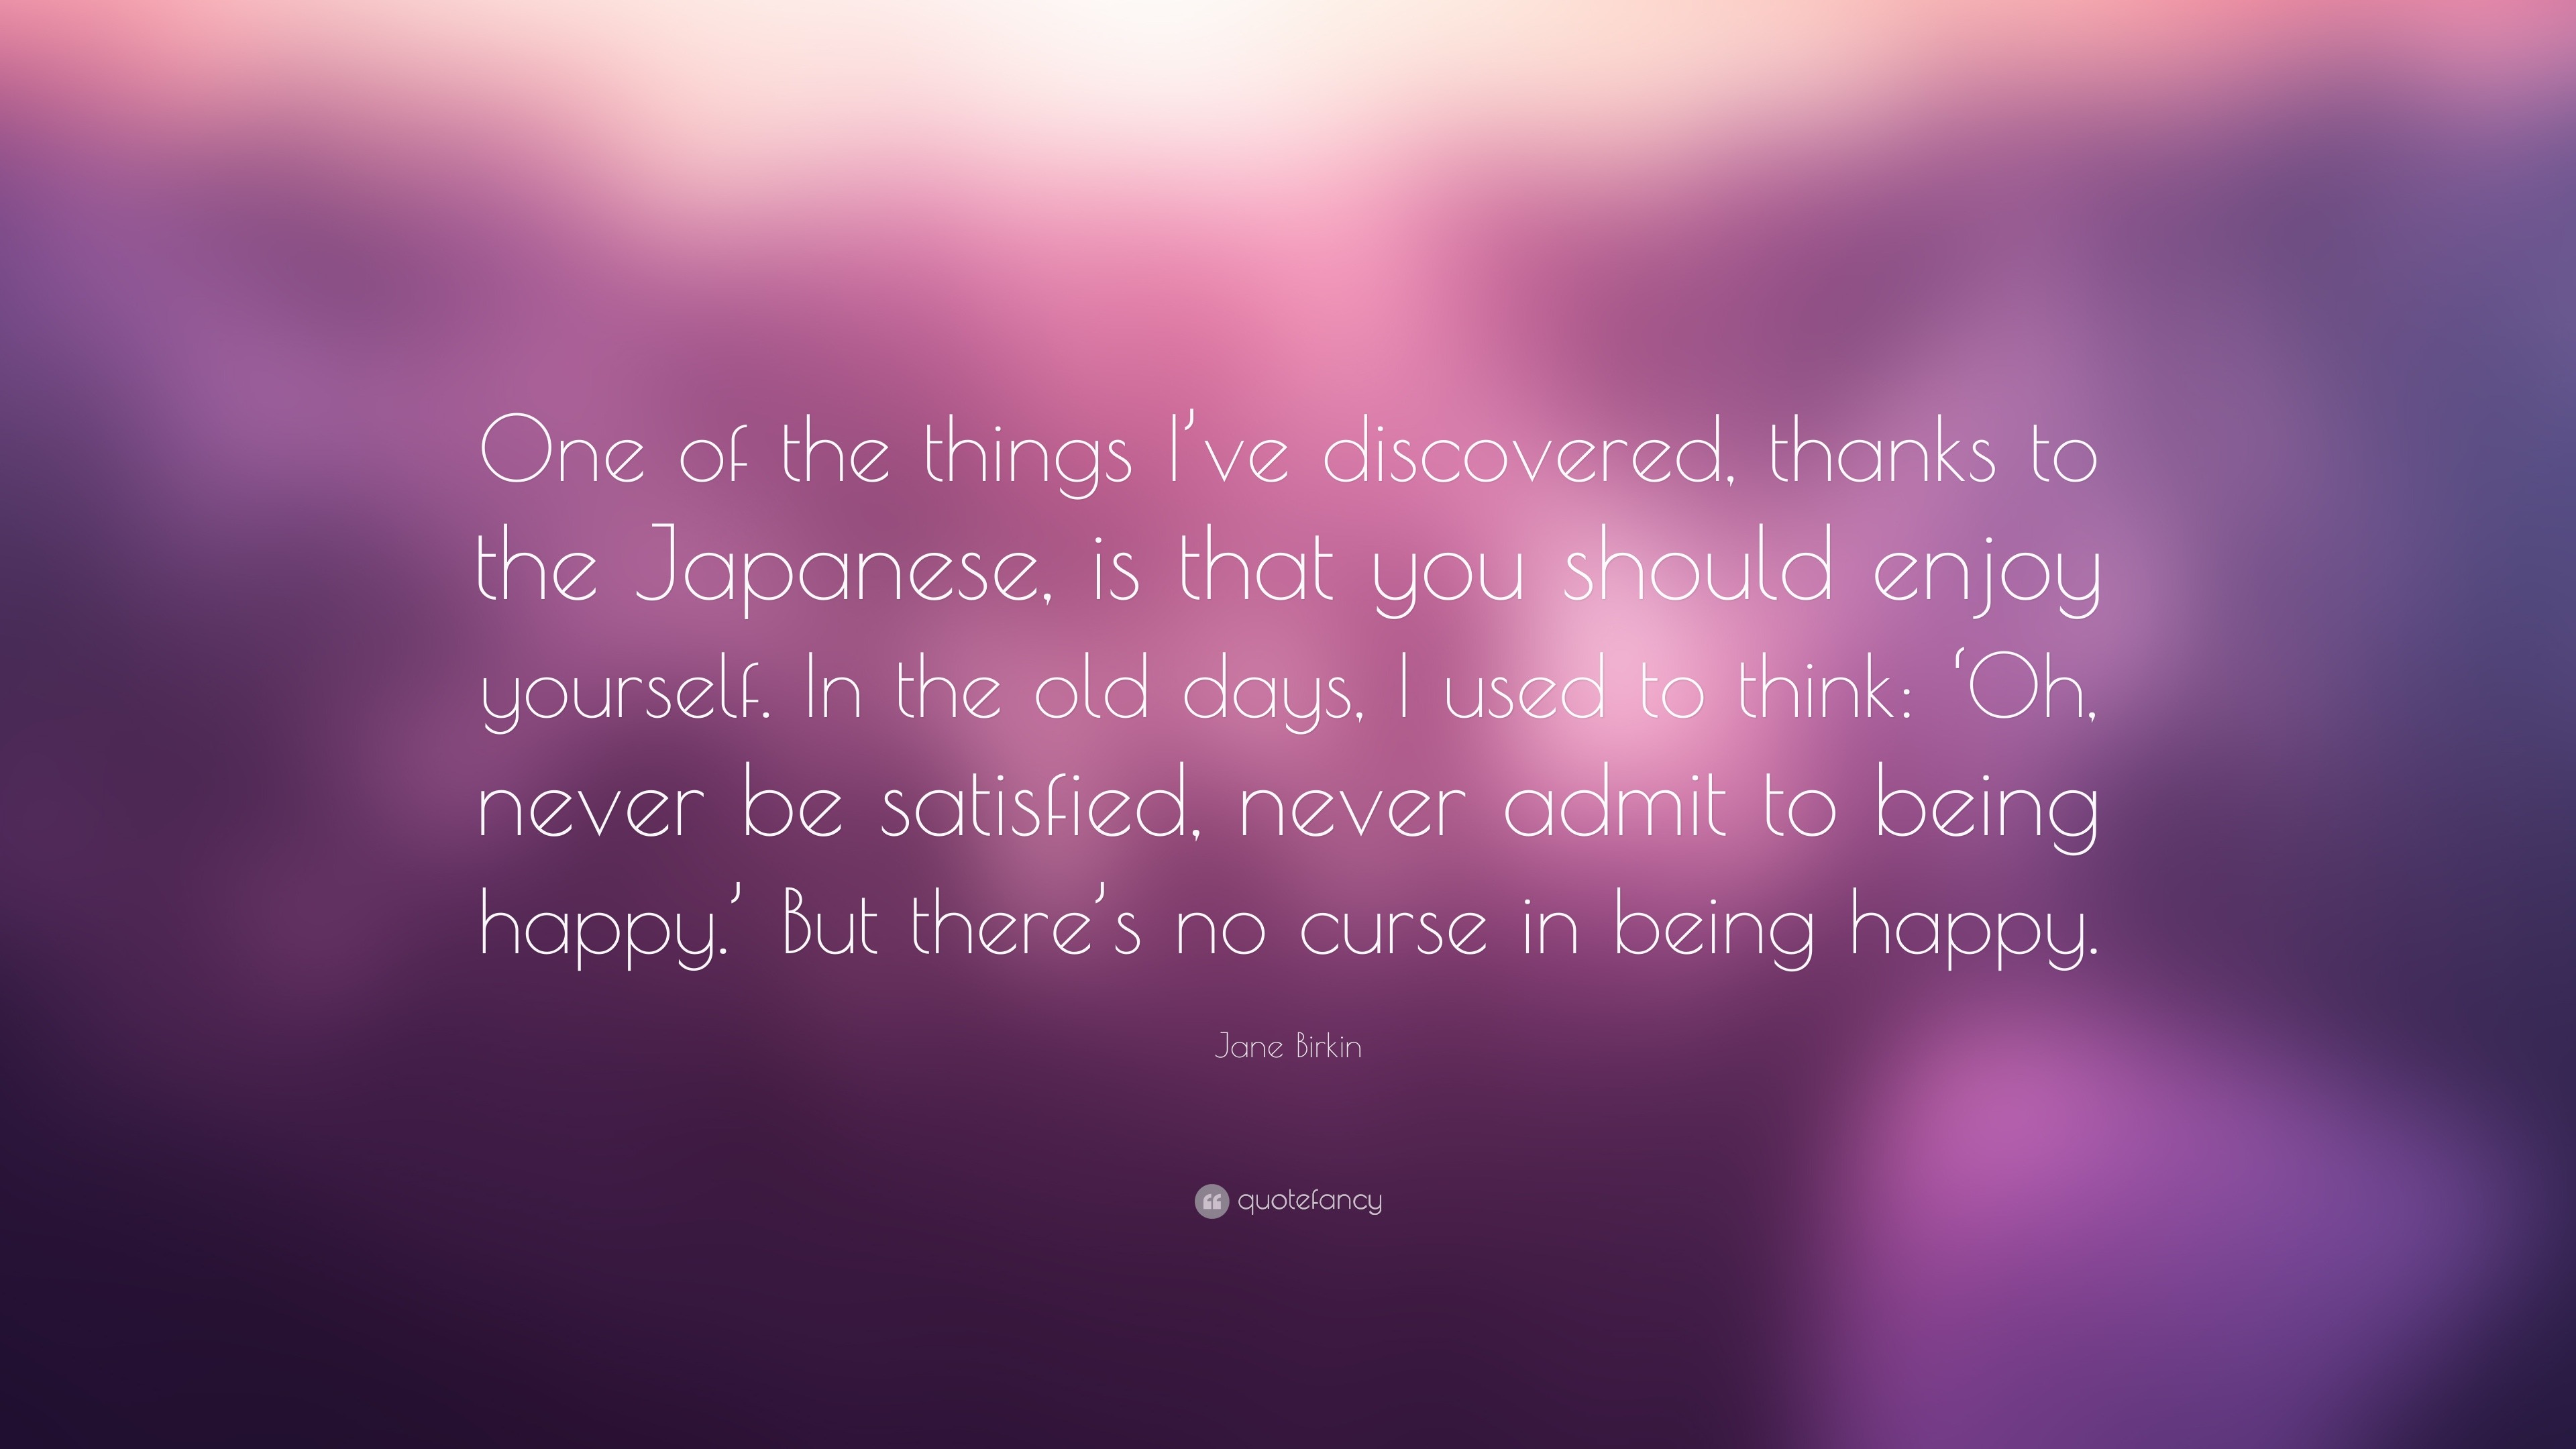 10 Amazing Jane Birkin quotes to inspire you